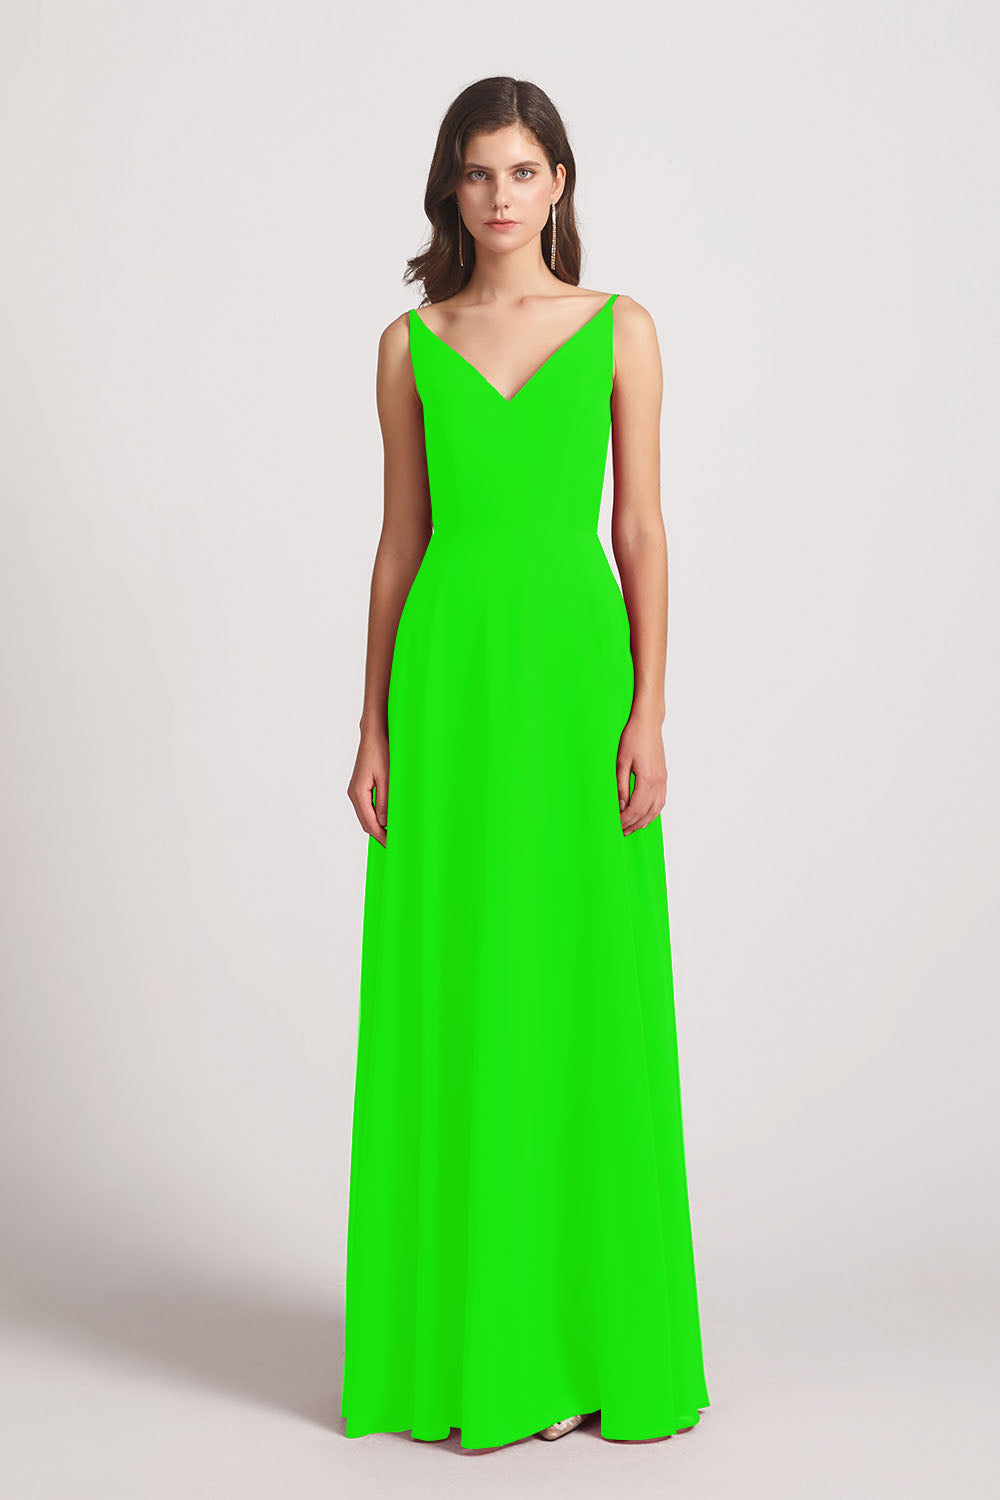 Alfa Bridal Lime Green V-Neck Spaghetti Straps Chiffon Bridesmaid Dresses With Back Tie (AF0002)